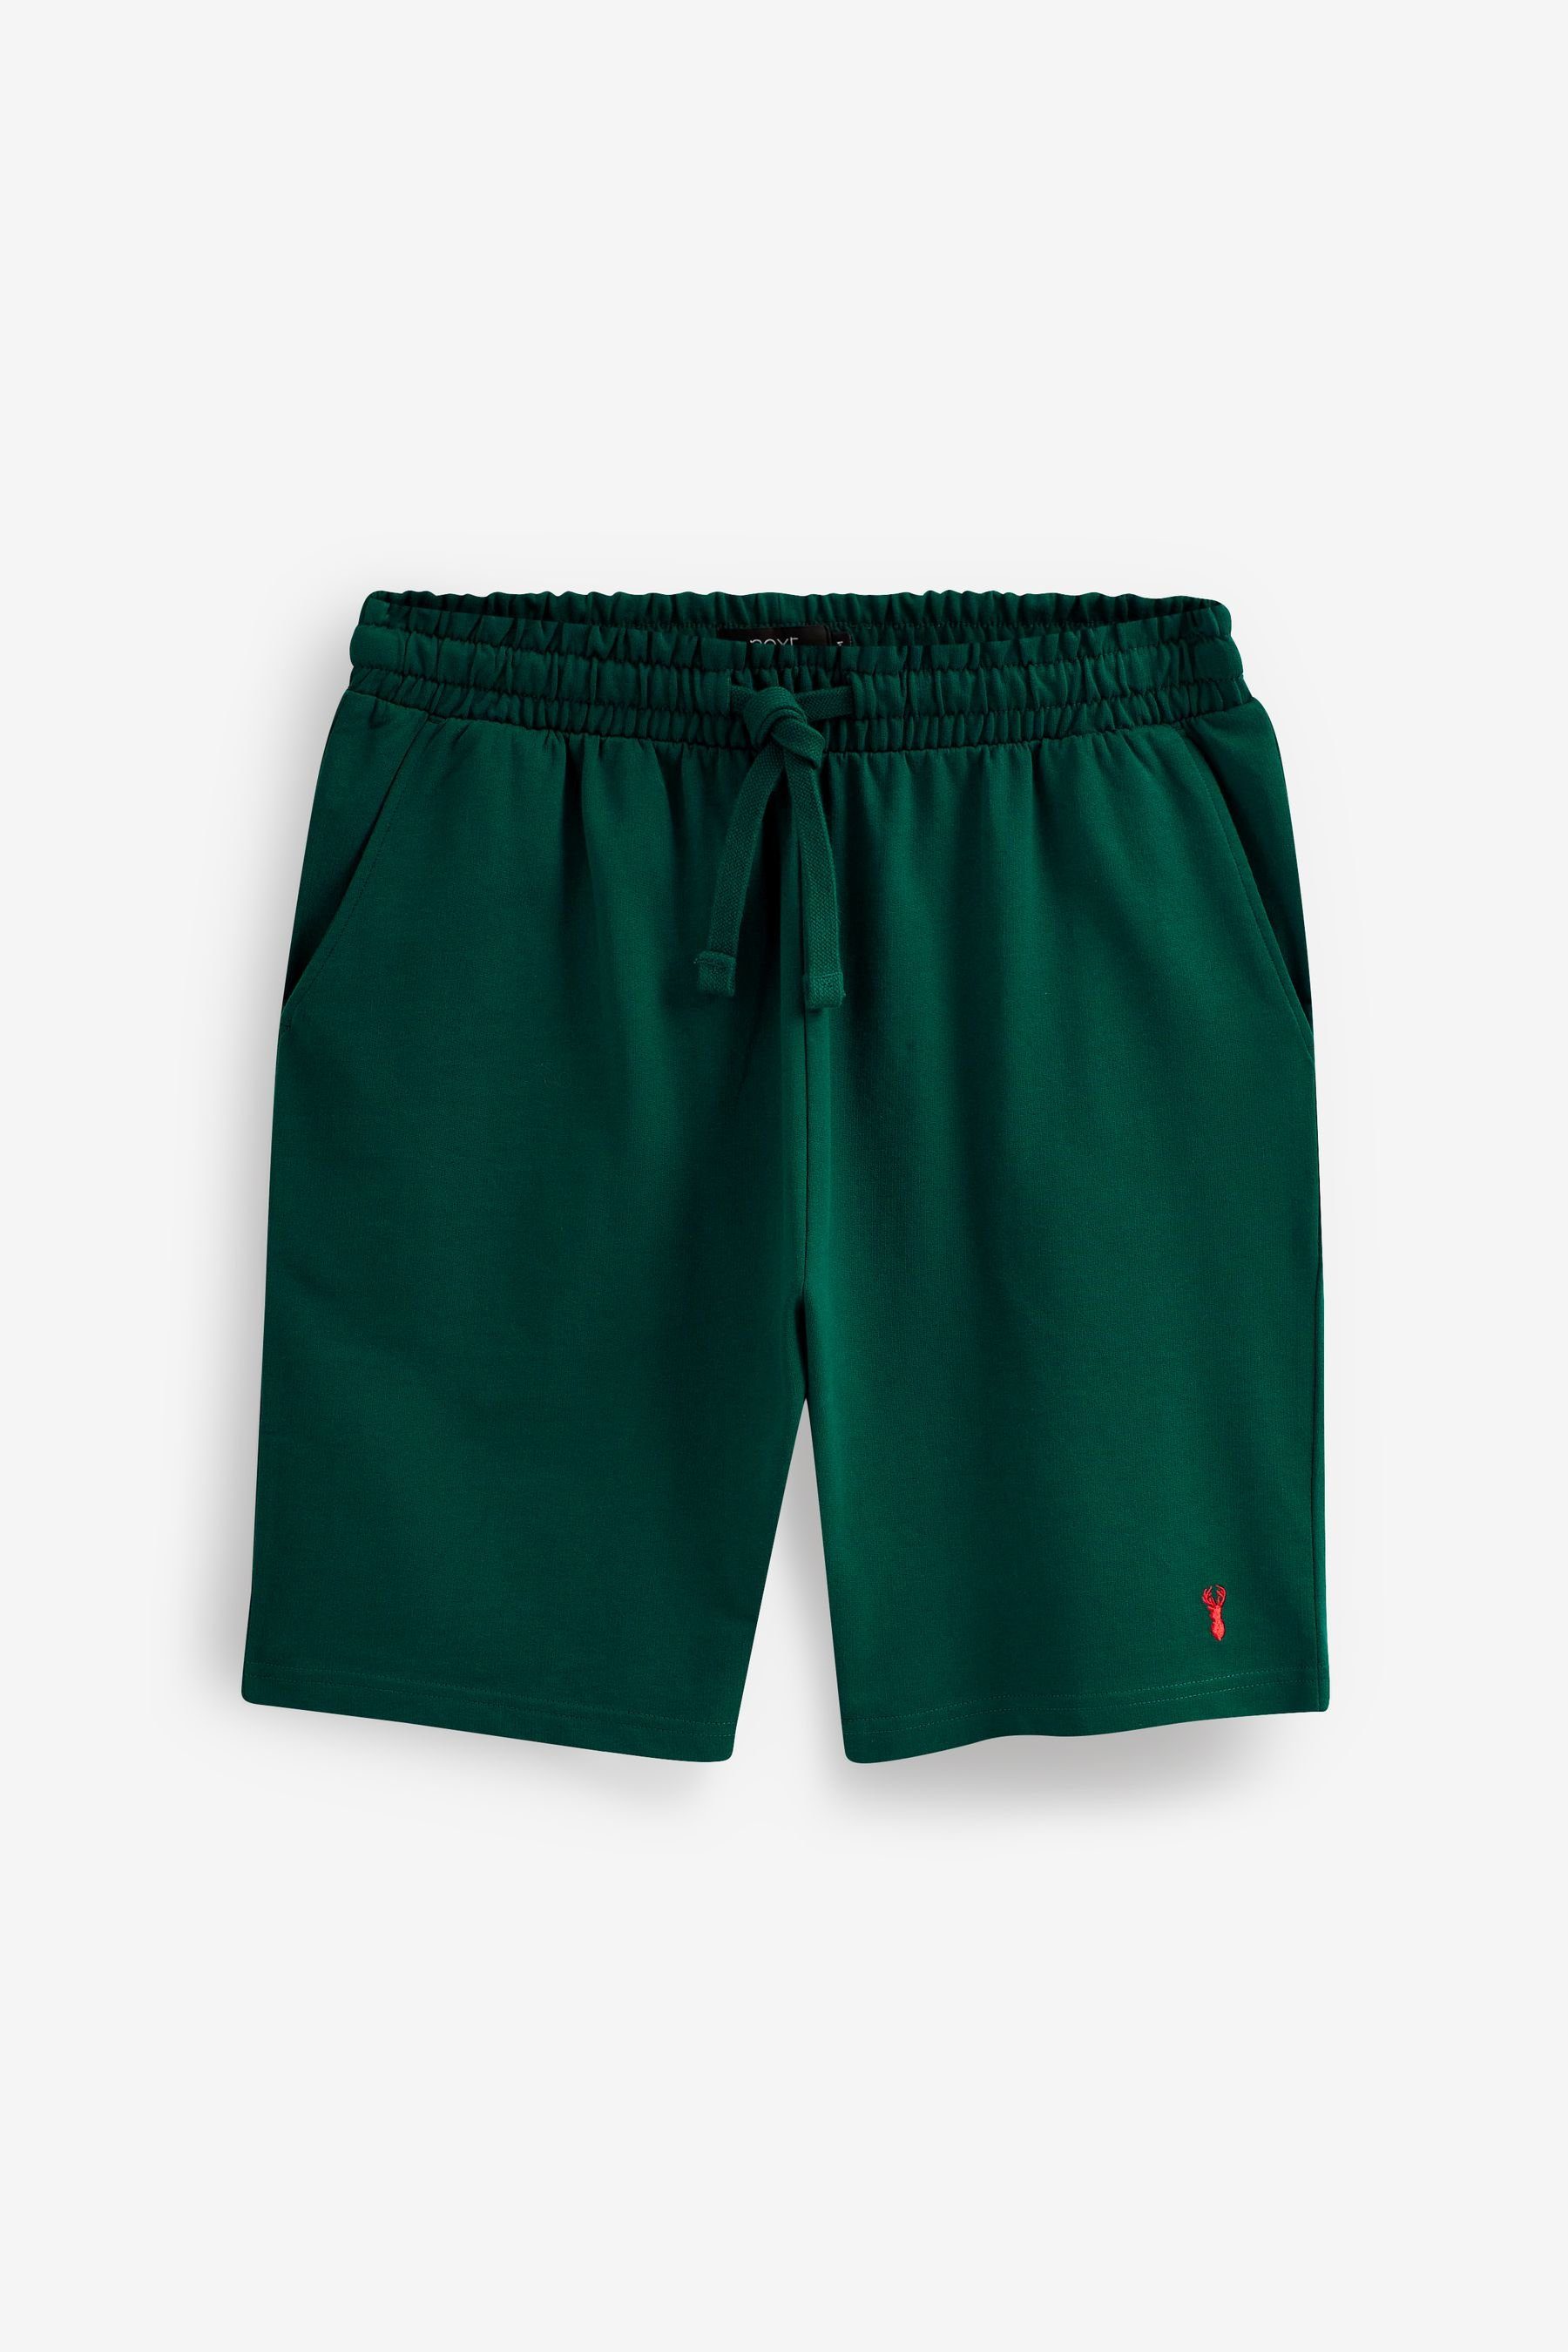 Next Schlafshorts Leichte (2-tlg) Blue Shorts, Green/Navy 2er-Pack